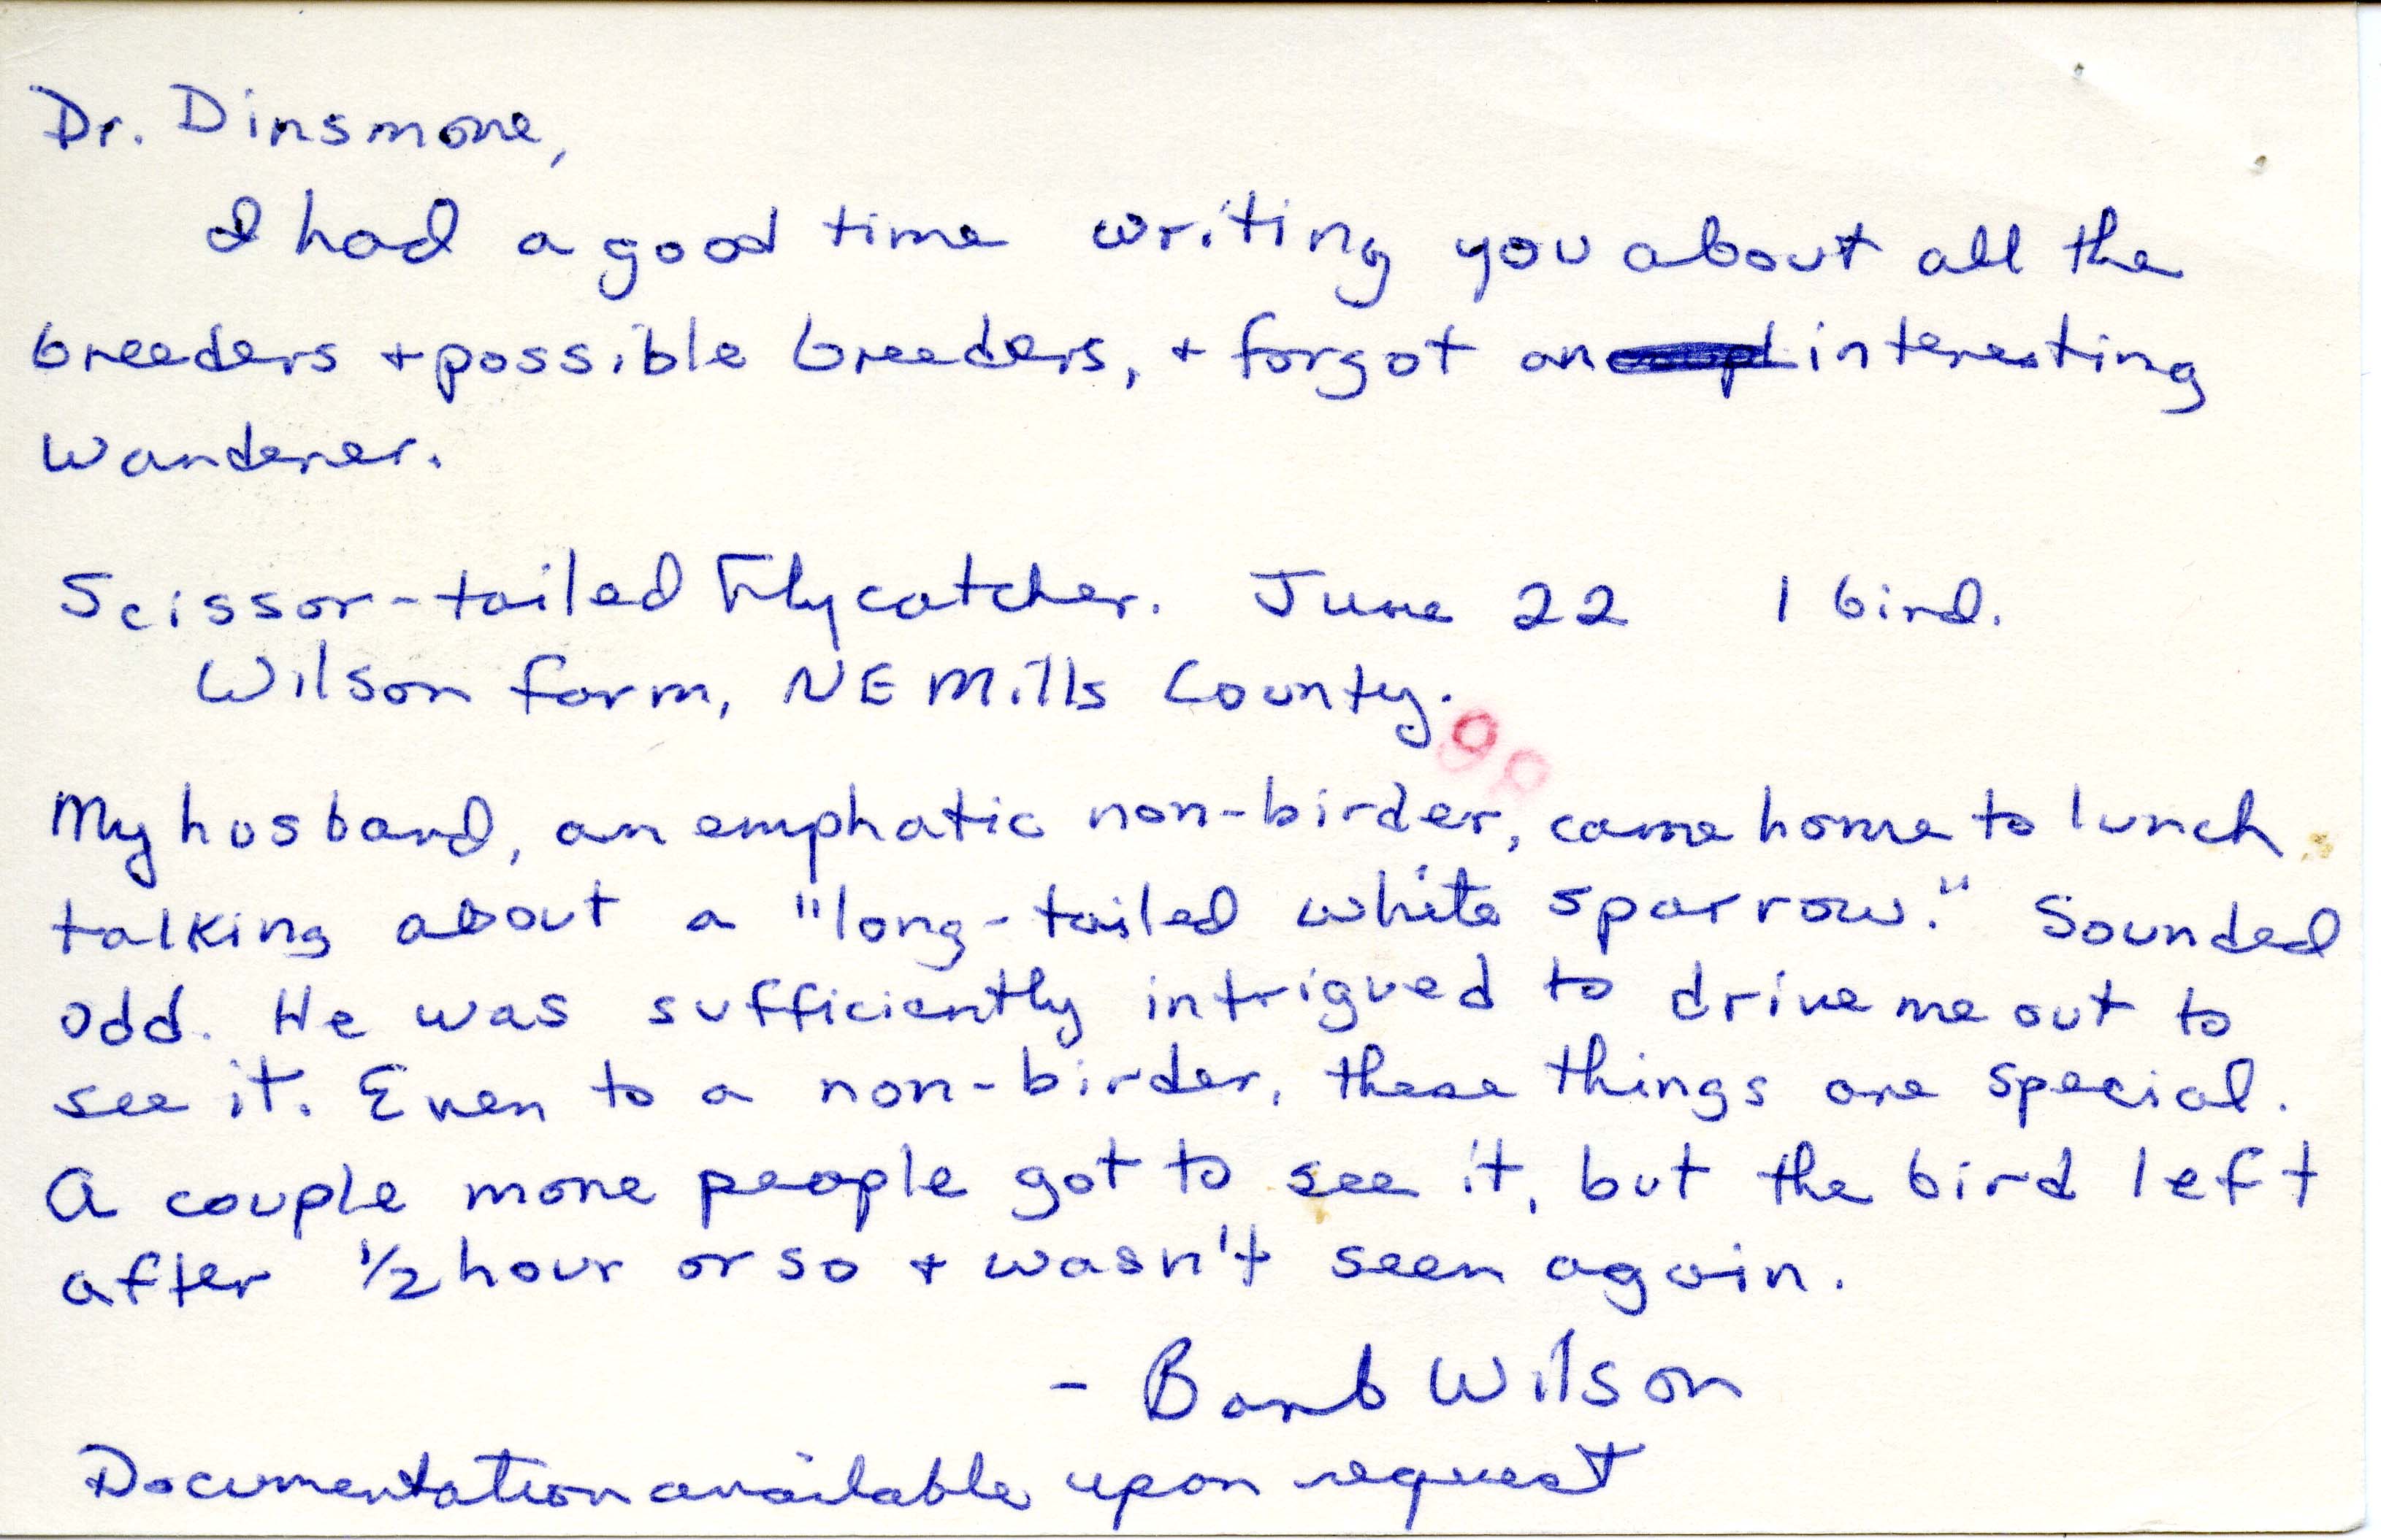 Barbara L. Wilson postcard to James J. Dinsmore regarding sighting a Scissor-tailed Flycatcher, June 22, 1984